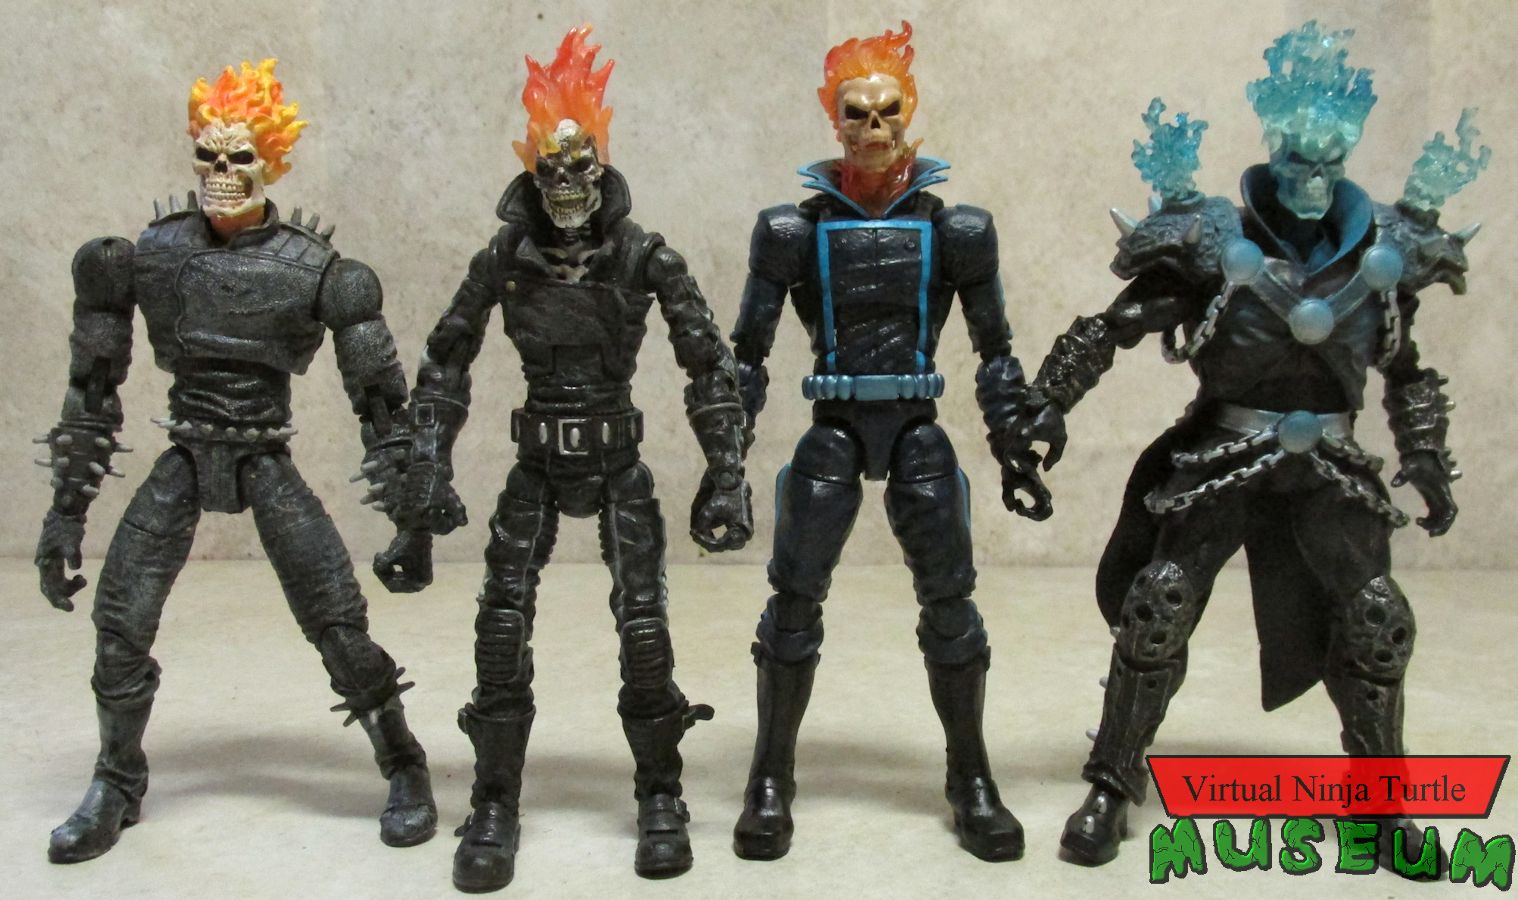 Ghost Rider figures